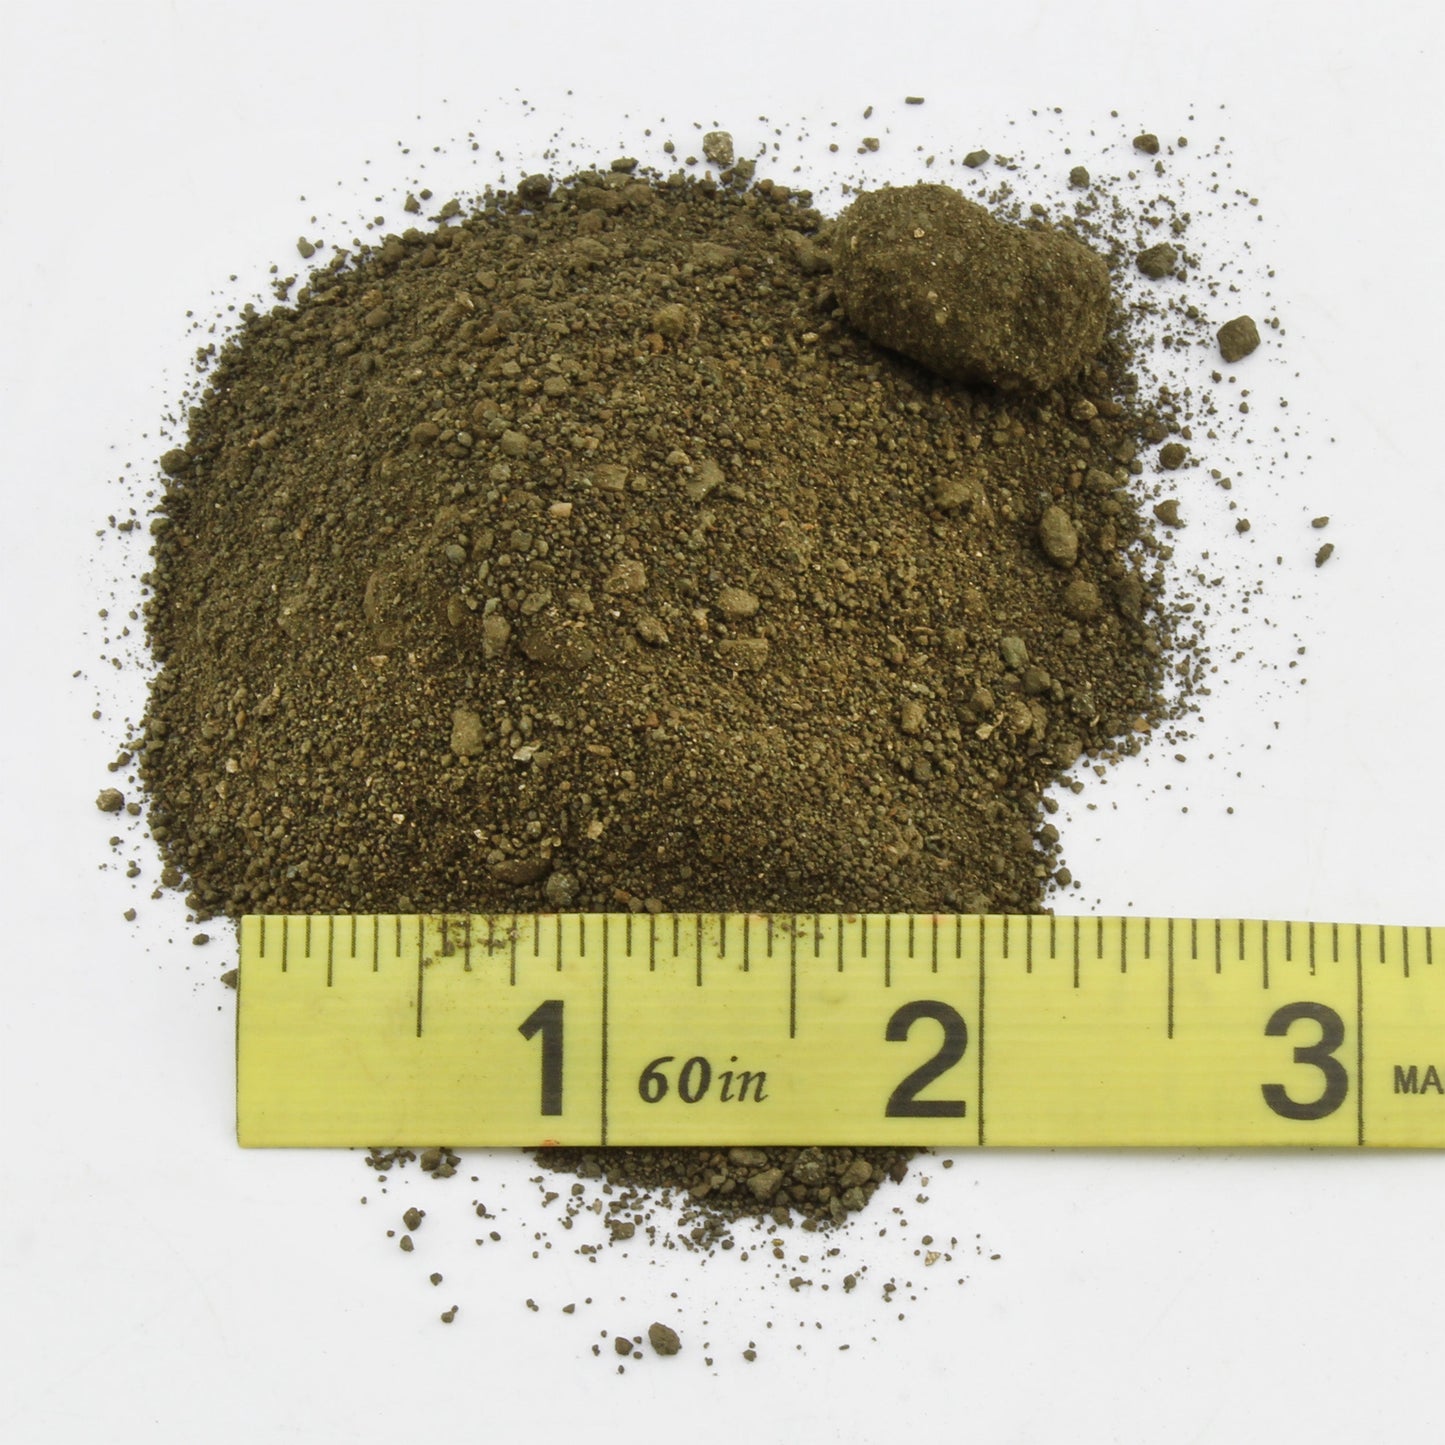 Greensand Soil Amendment (2 Pounds) - SSKIT182